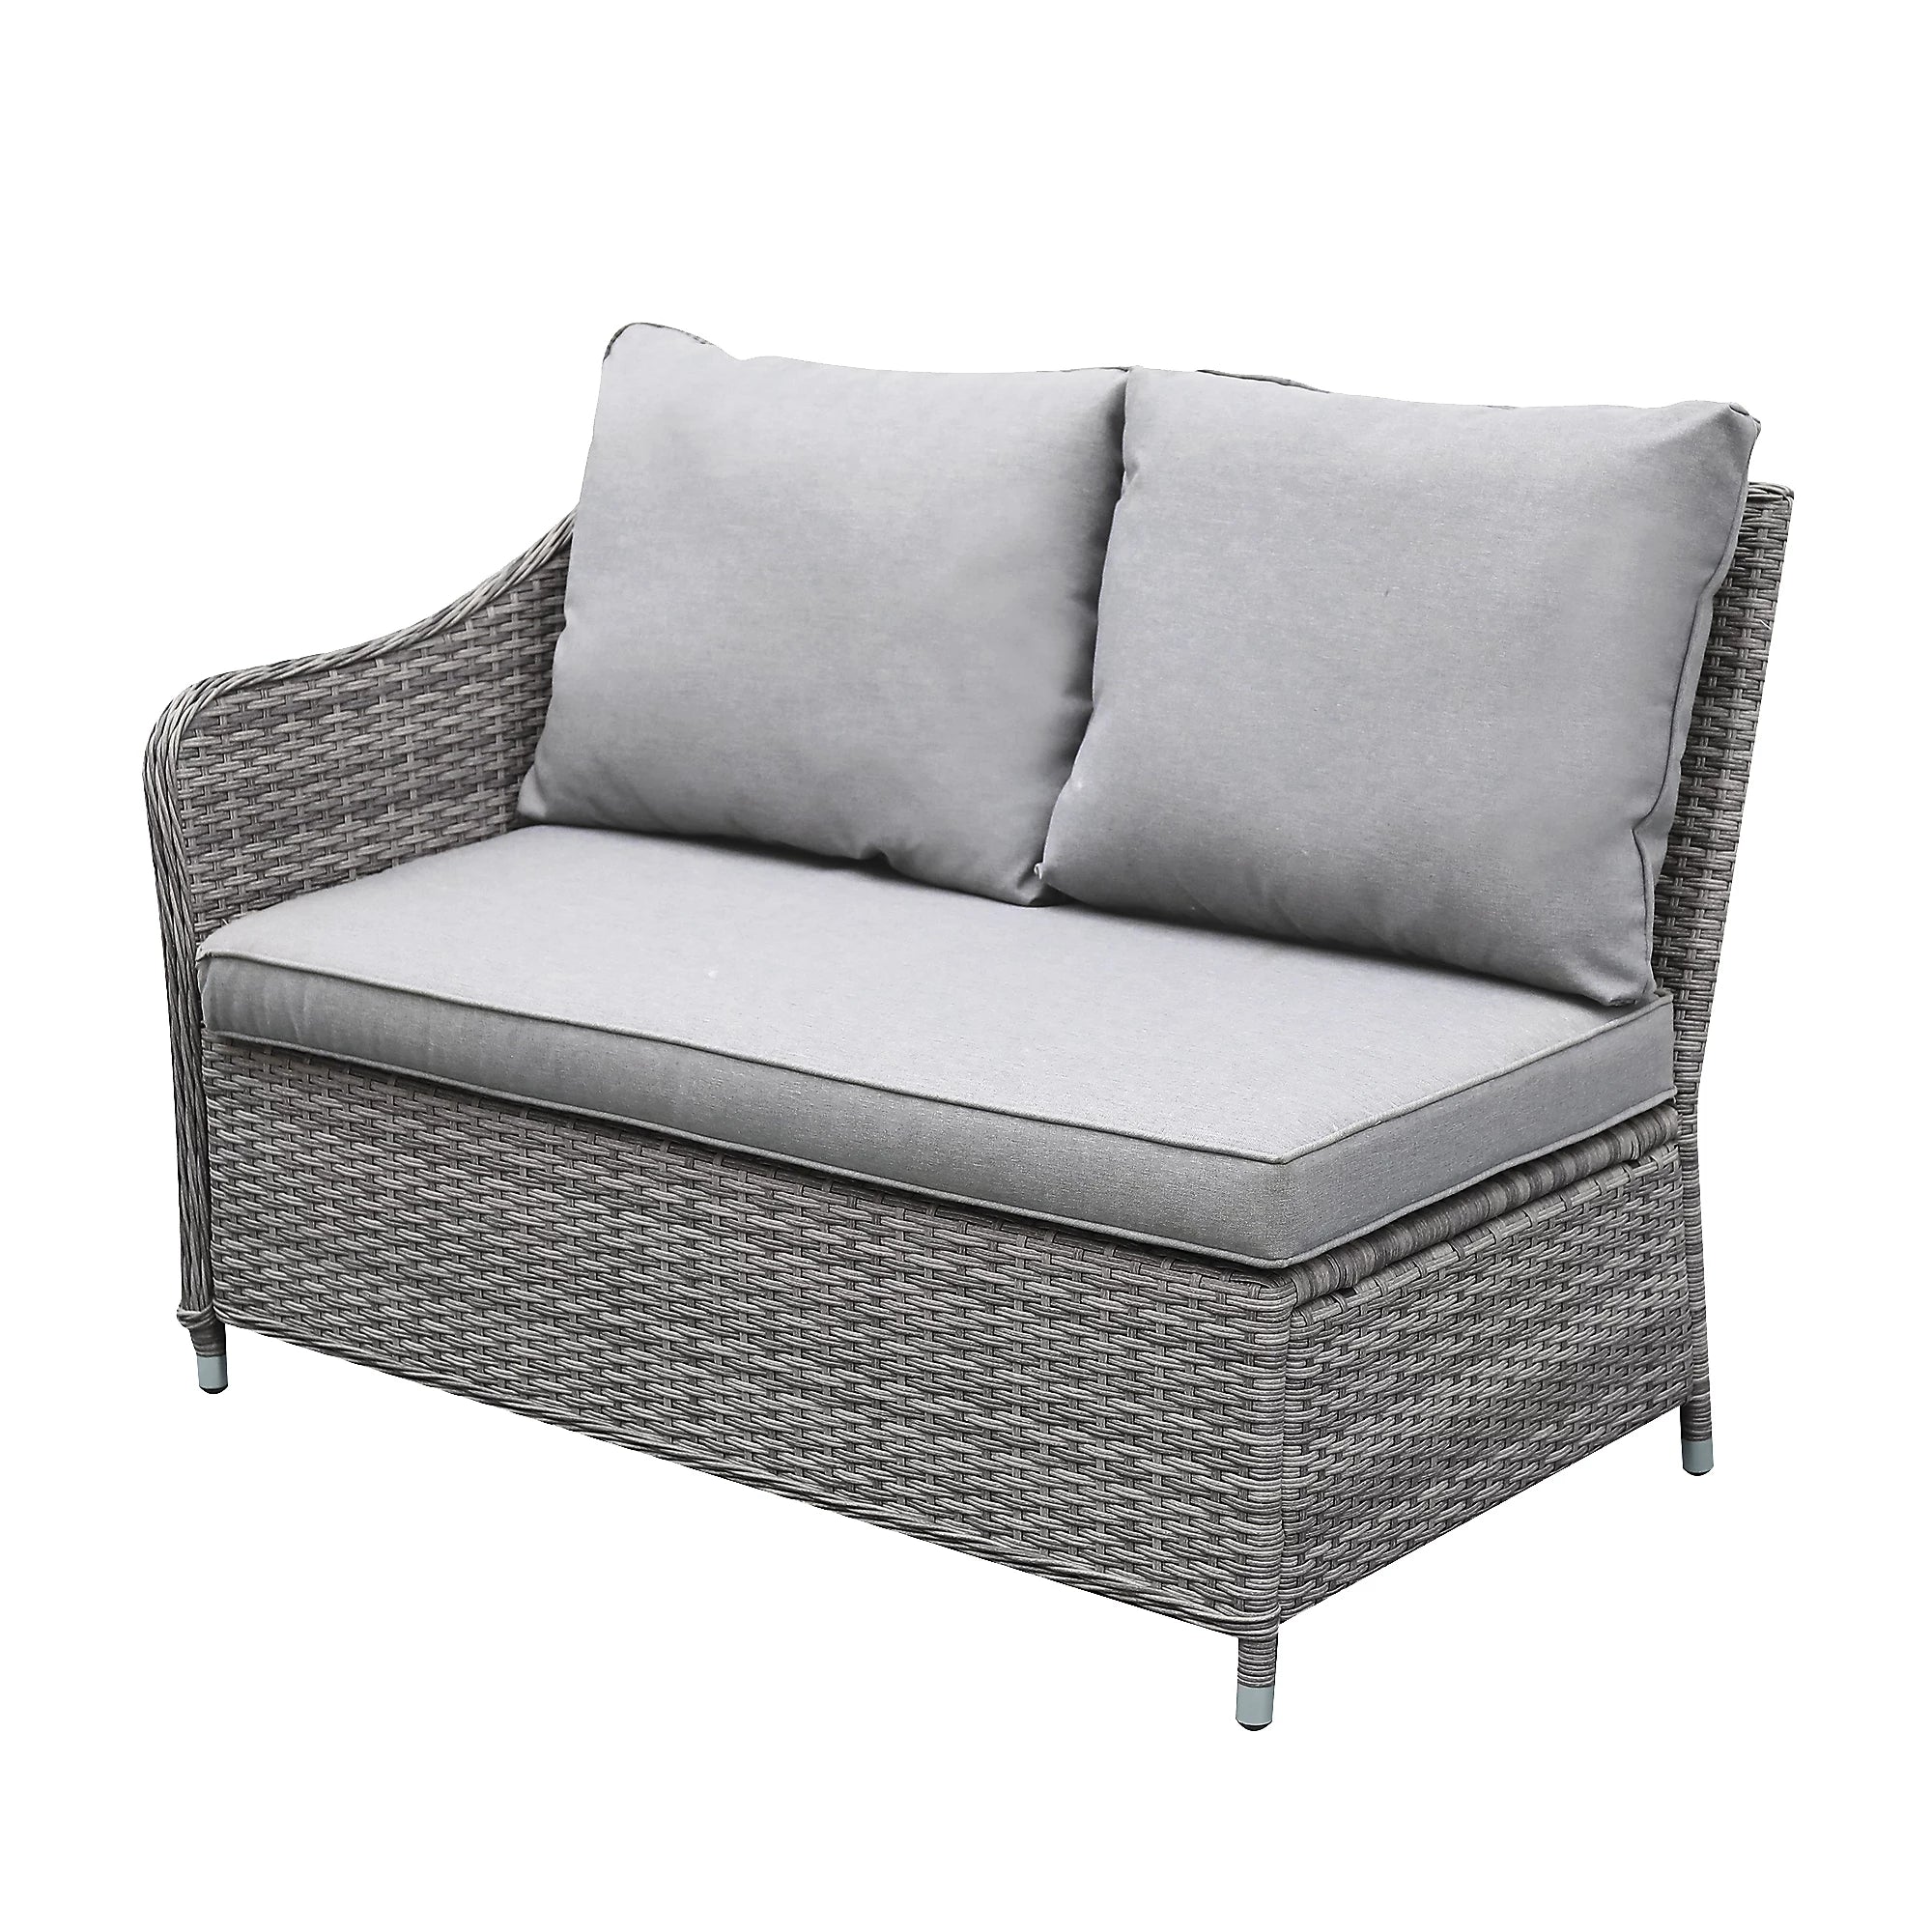 GoodHome Hamilton Steeple grey Rattan effect 8 Seater Garden furniture set - Rattan Garden Furniture 3342